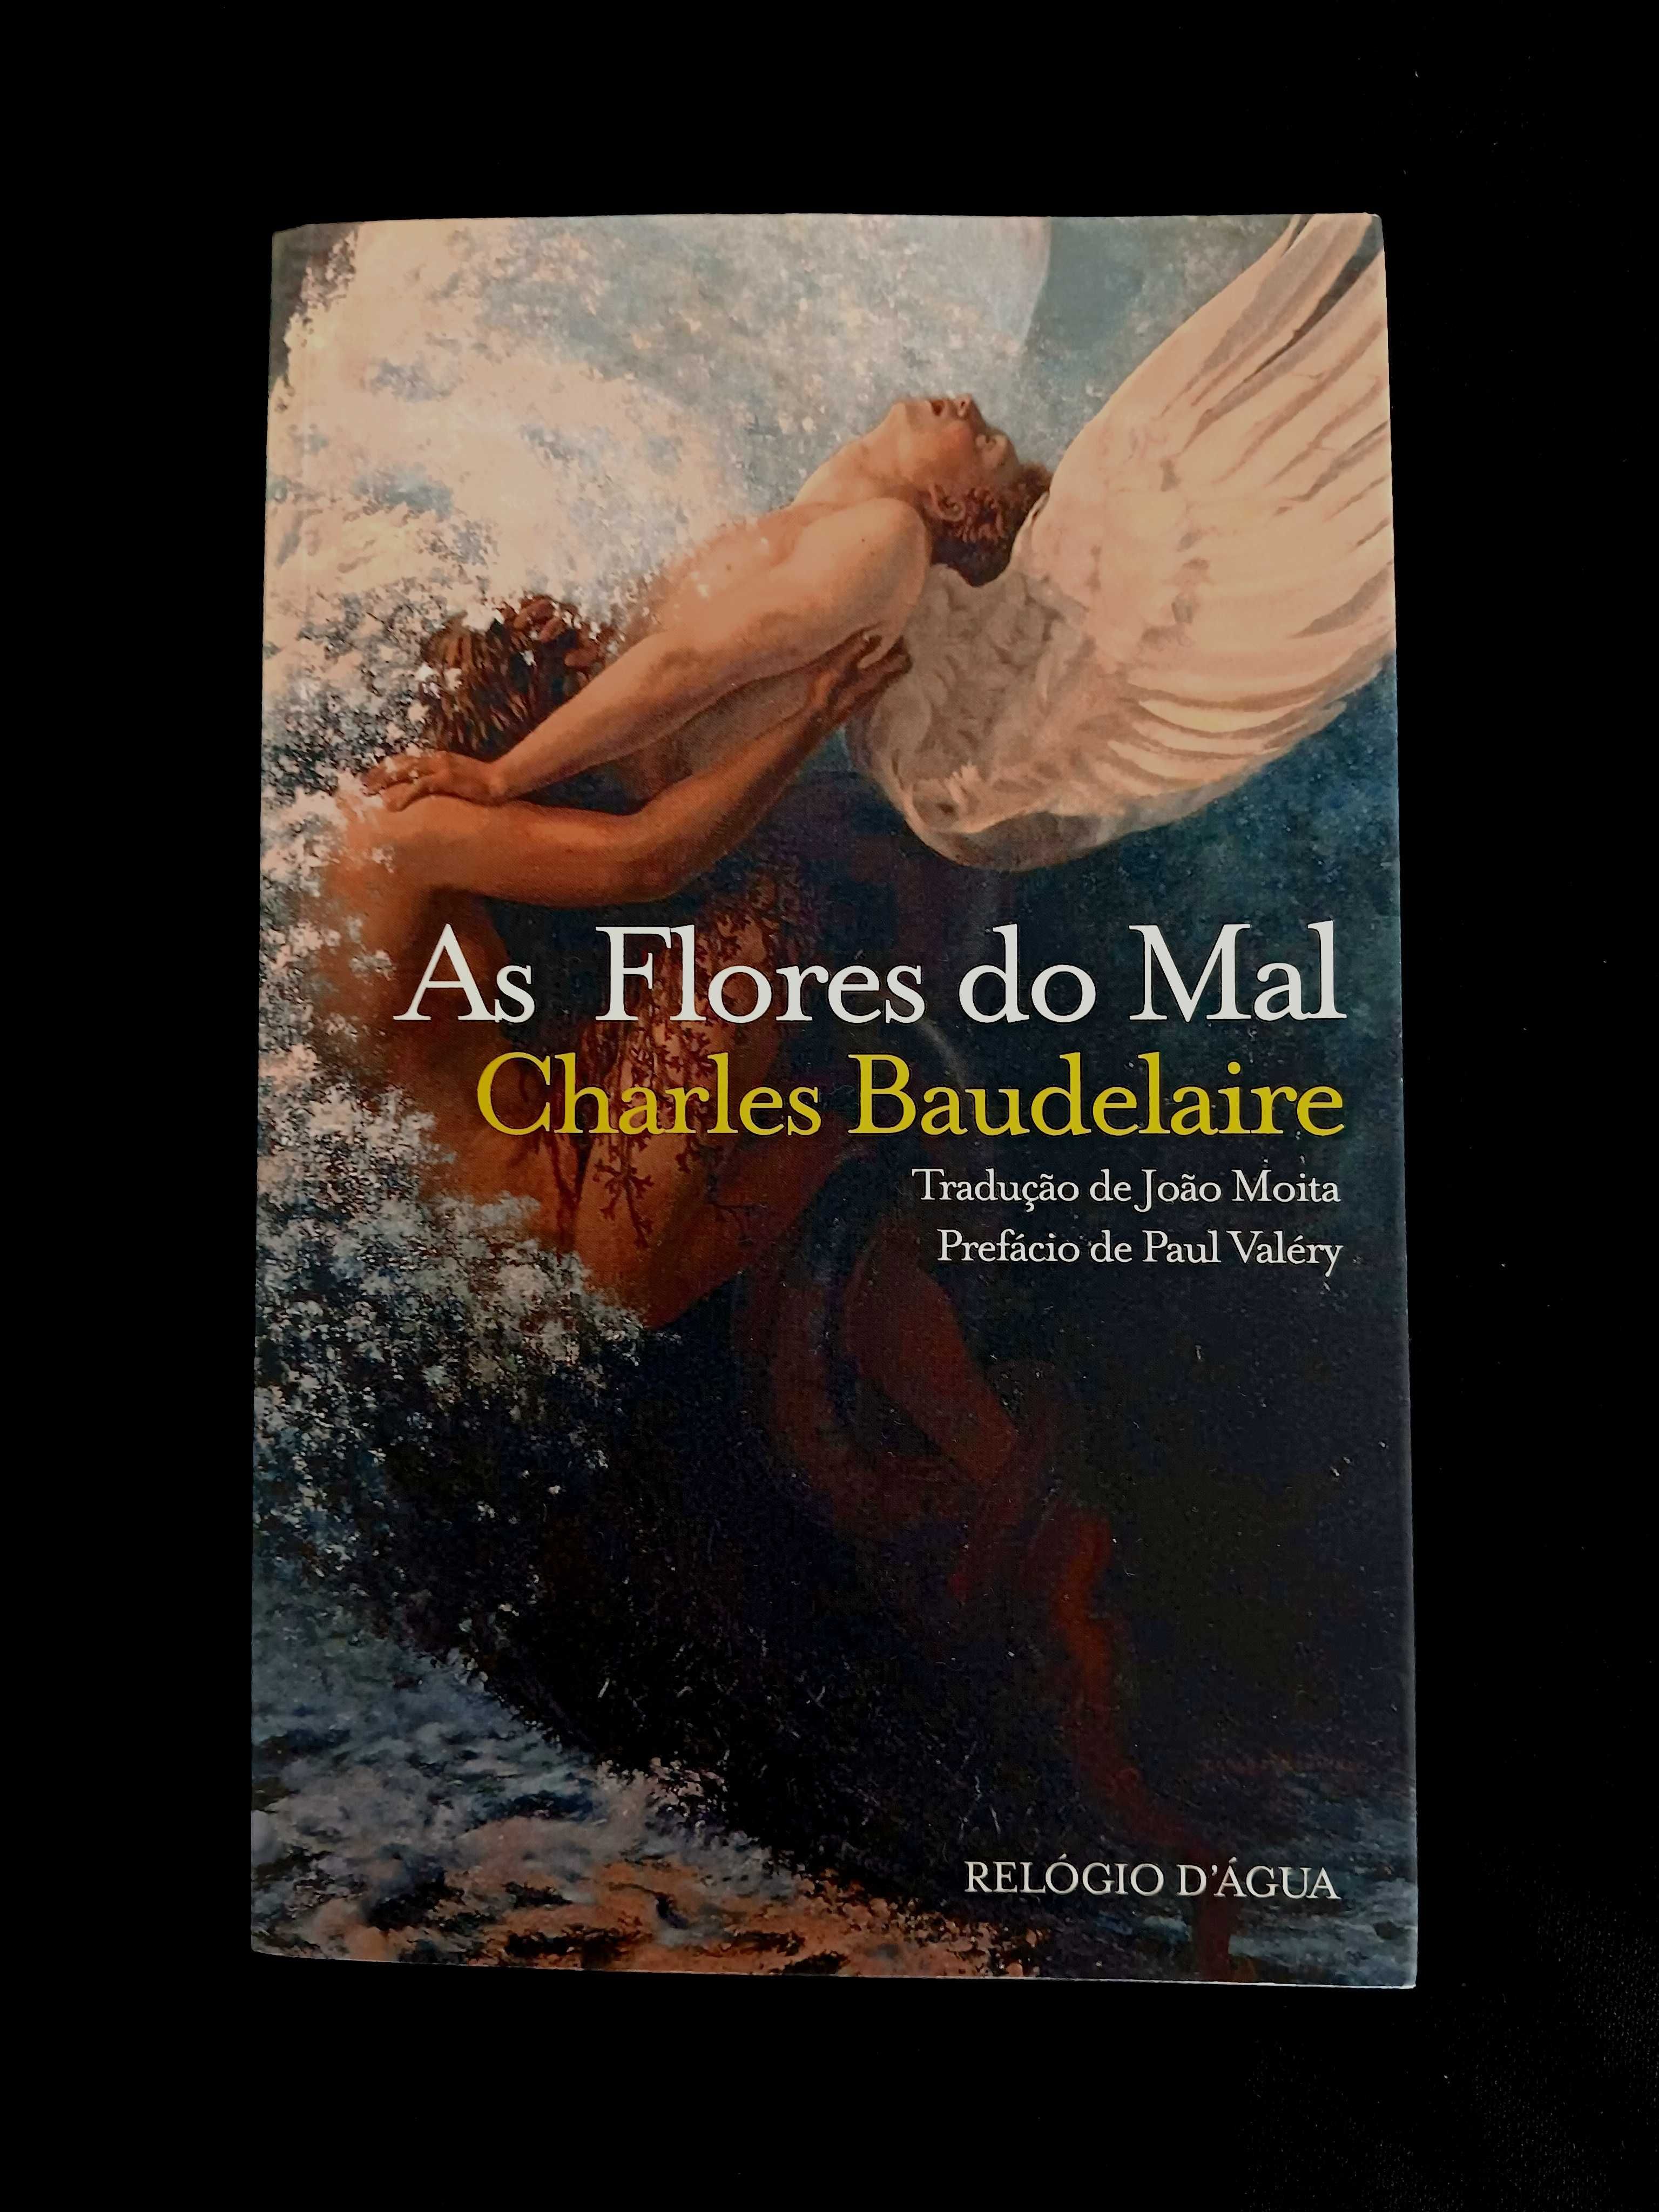 " As Flores do Mal " de Charles Baudelaire